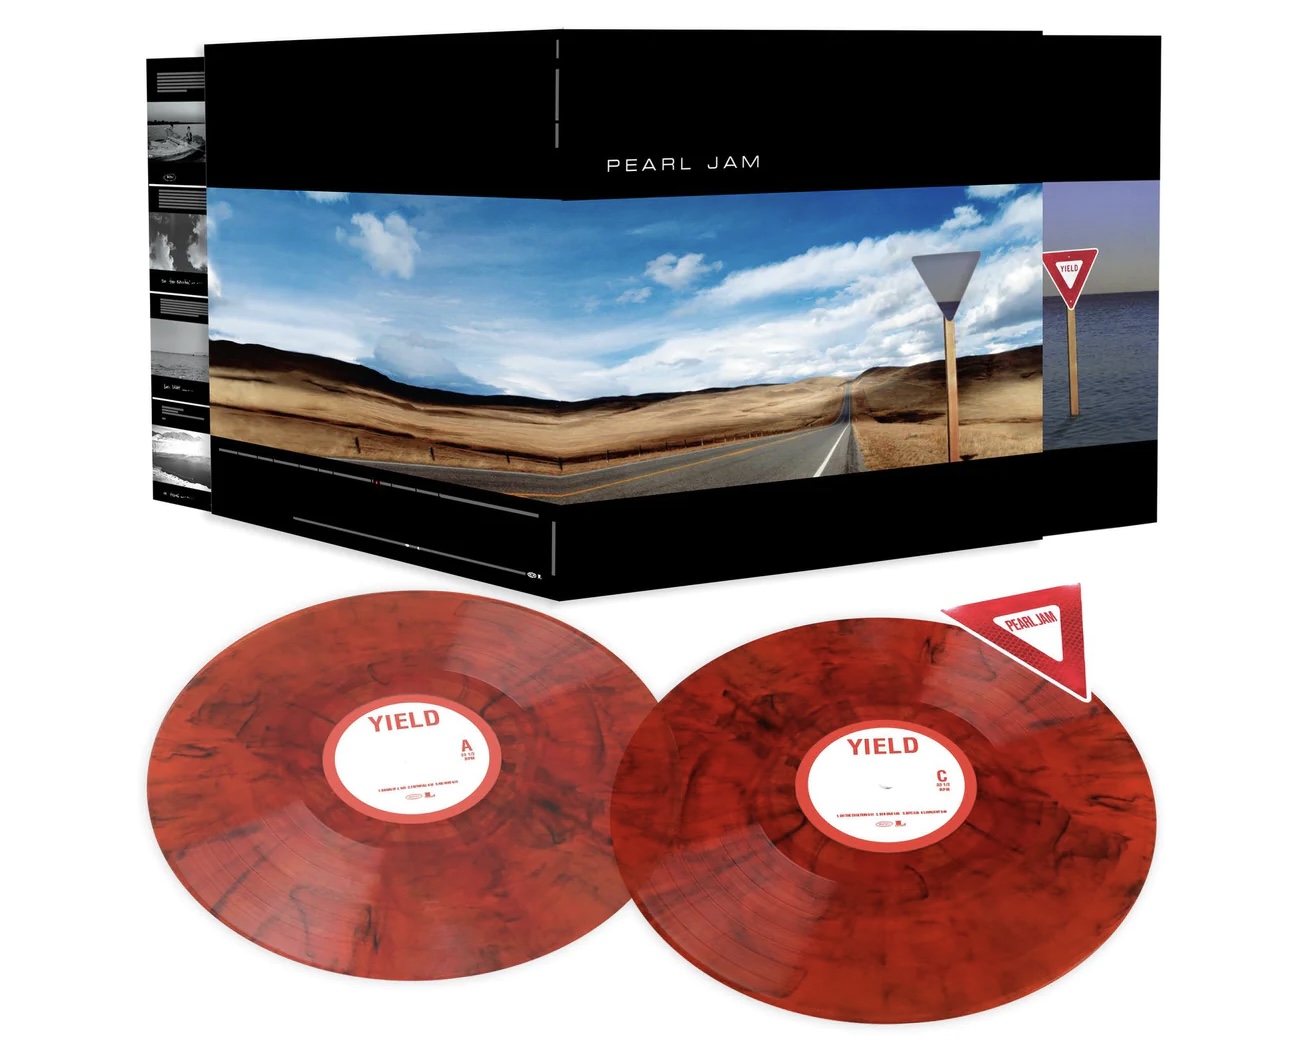 Jam: Yield 25th anniversary reissue and digital spatial audio - PearlJamOnline.it